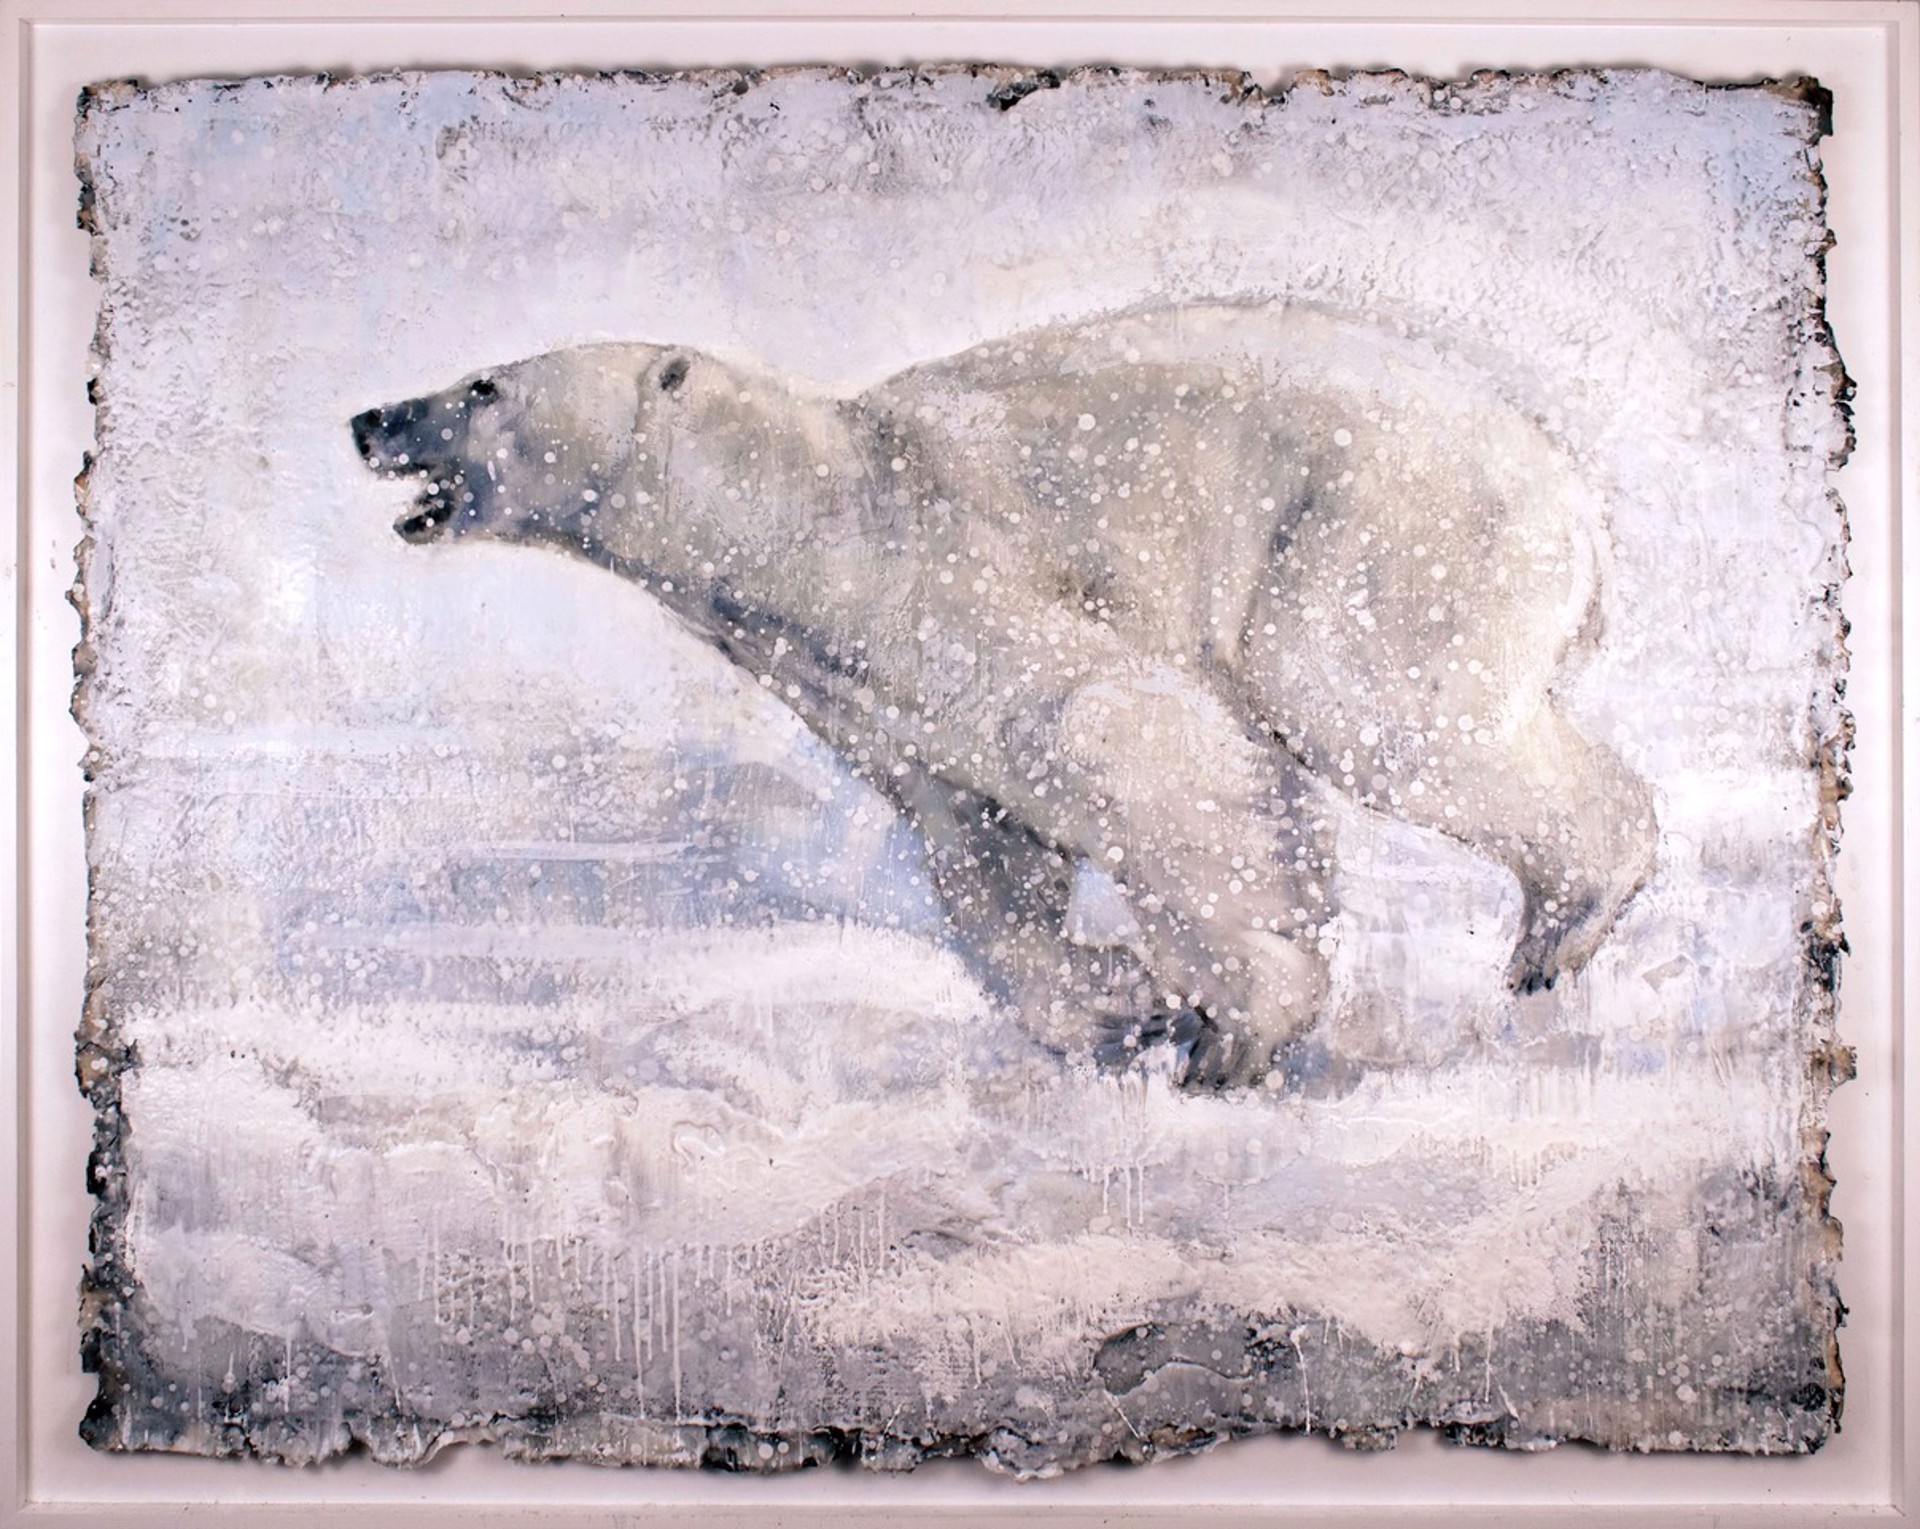 Polar Bear by Paul Garbett